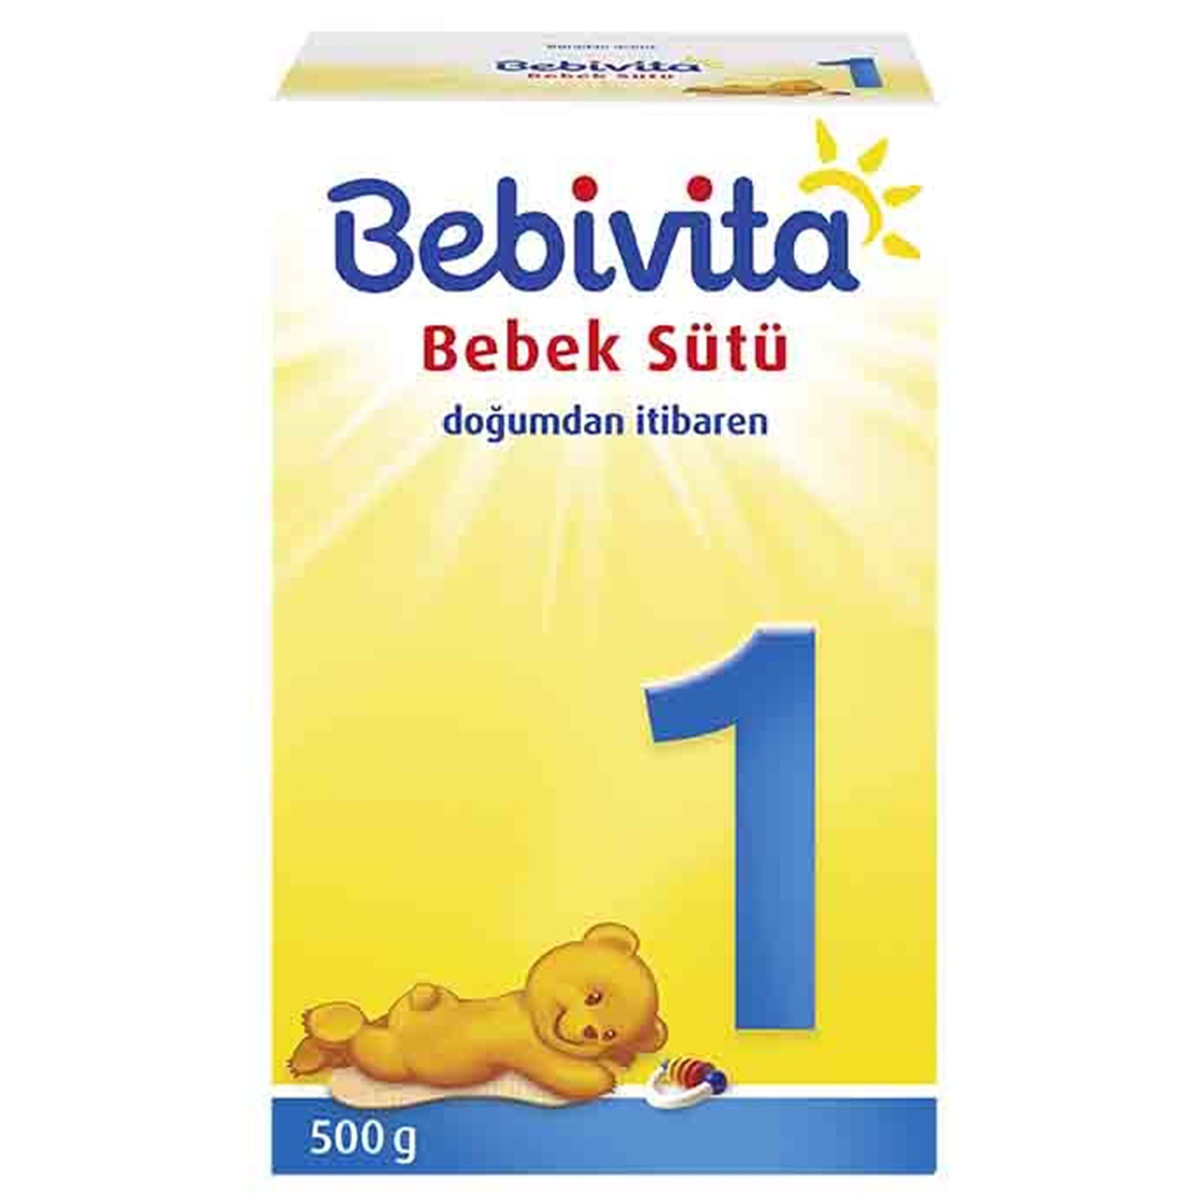 Bebivita Bebek Sütü 1 Numara 500g